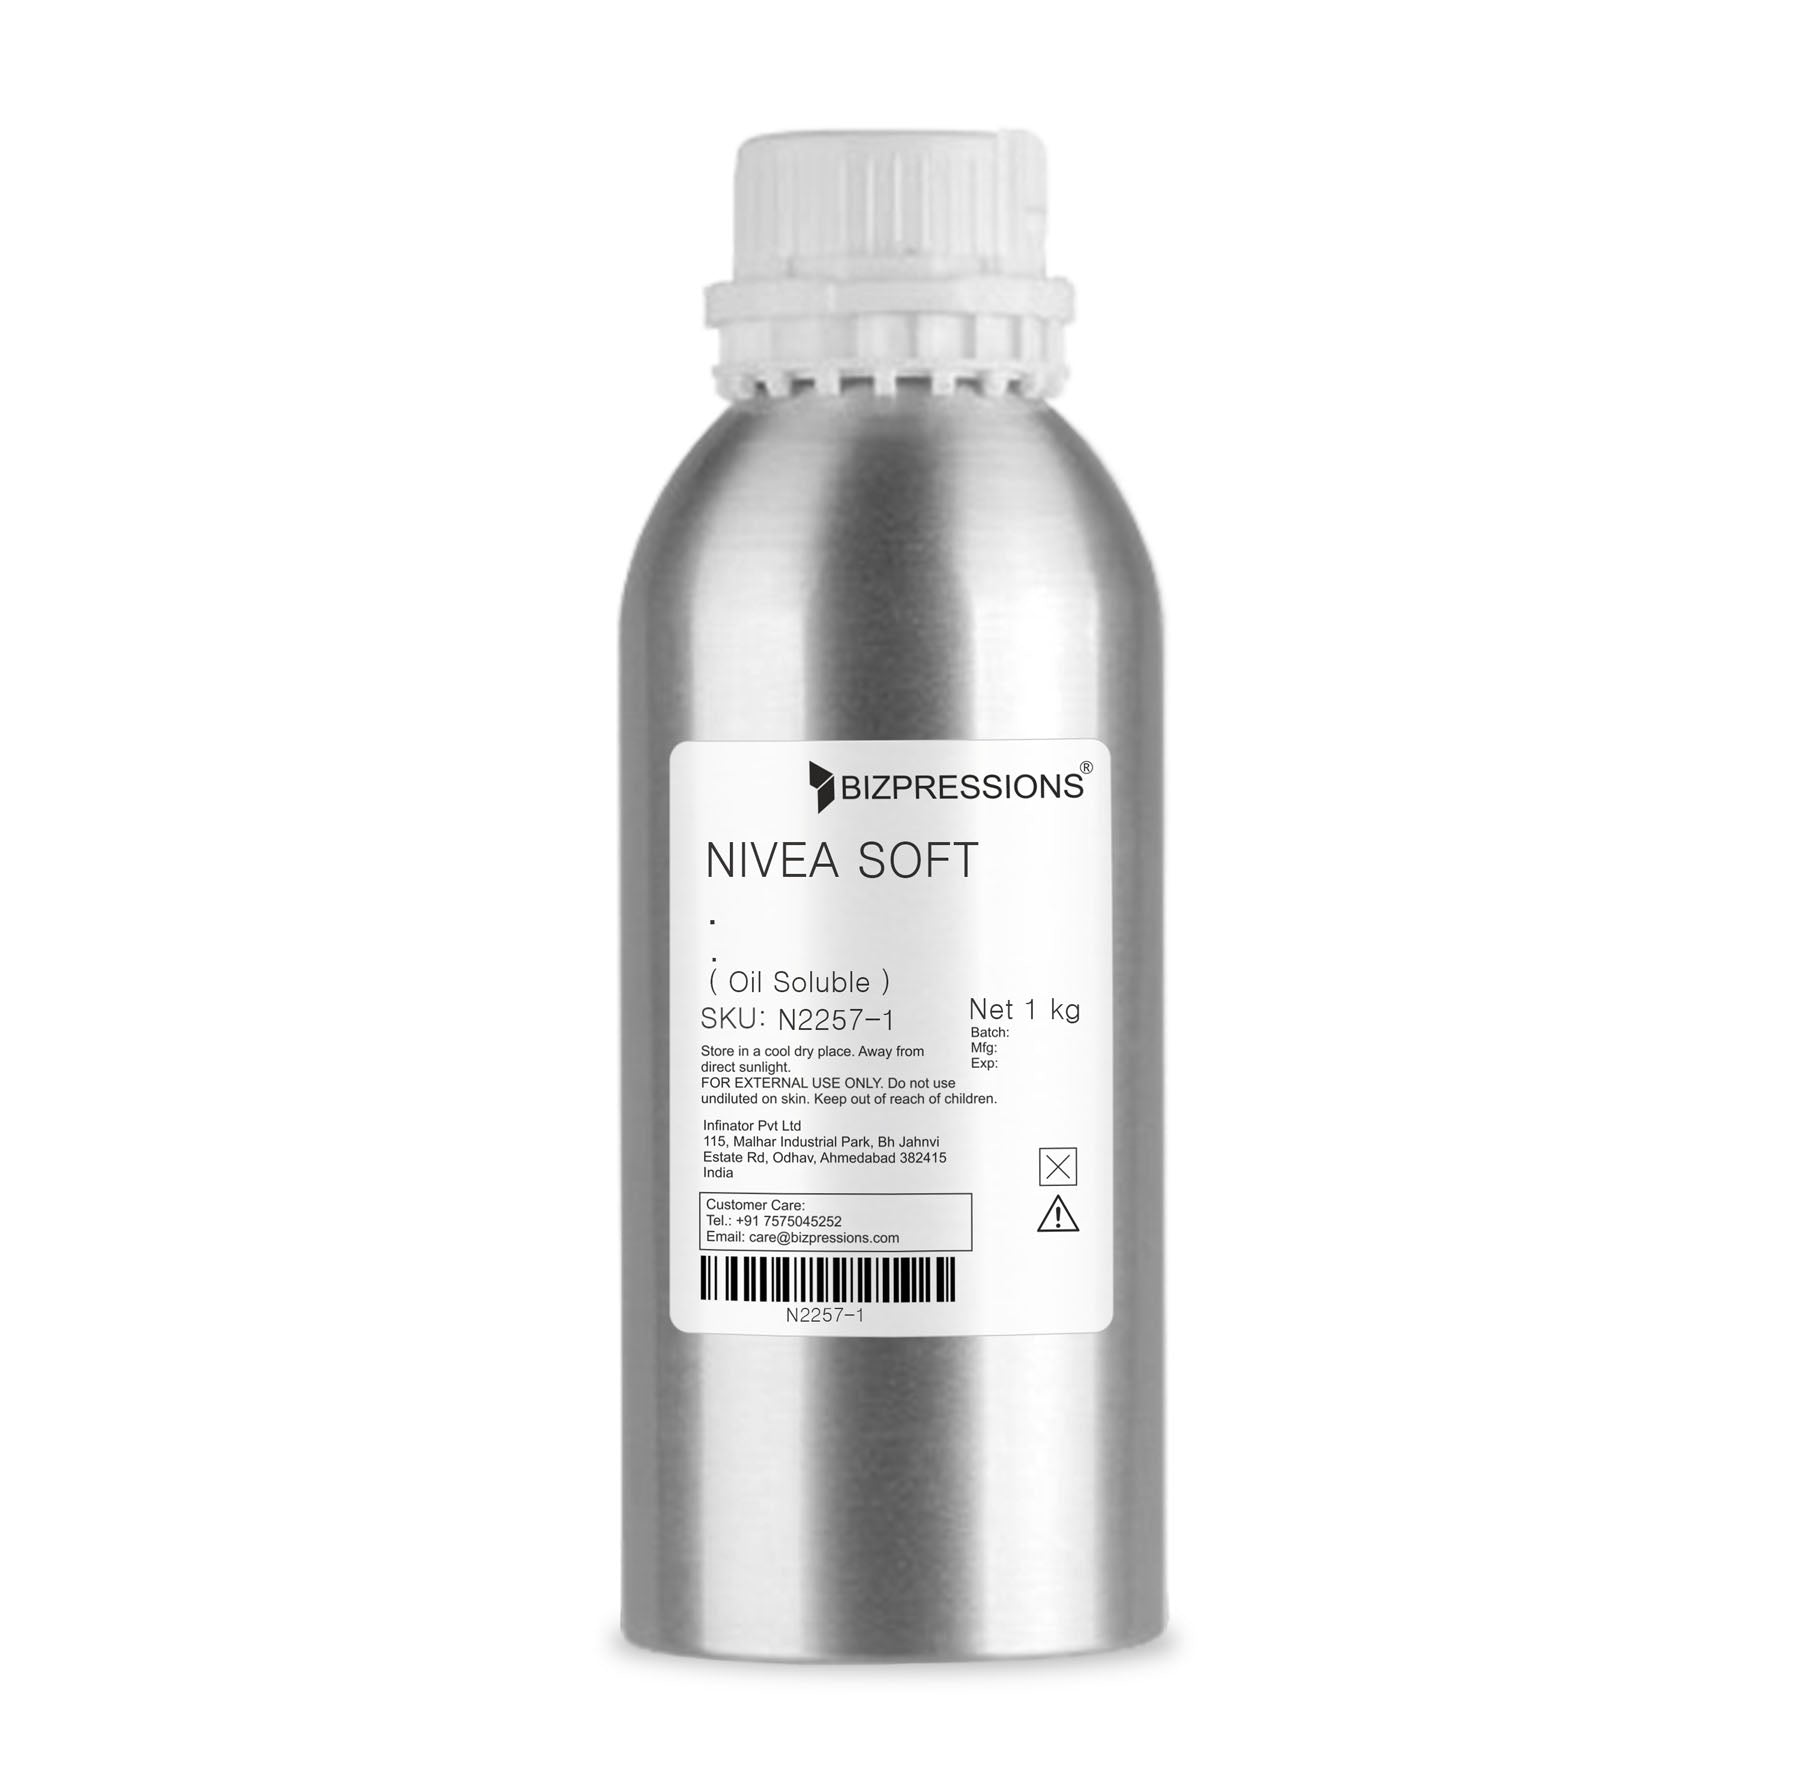 NIVEA SOFT - Fragrance ( Oil Soluble ) - 1 kg